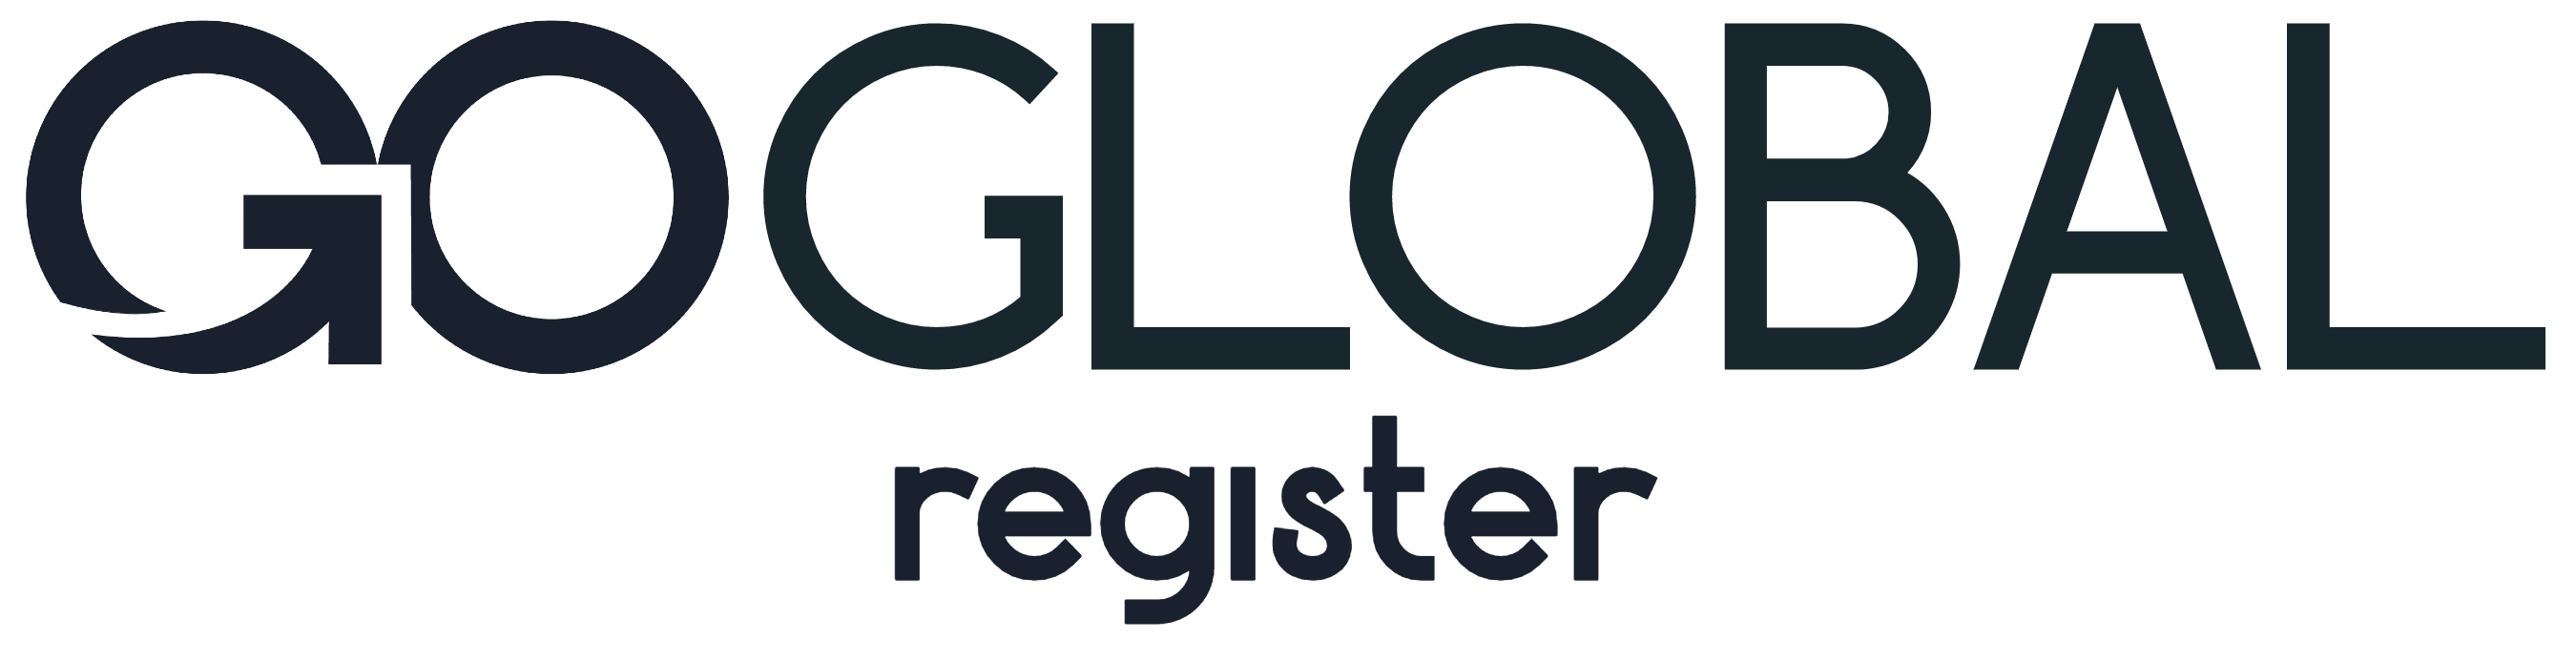 logo goglobal multilevel network